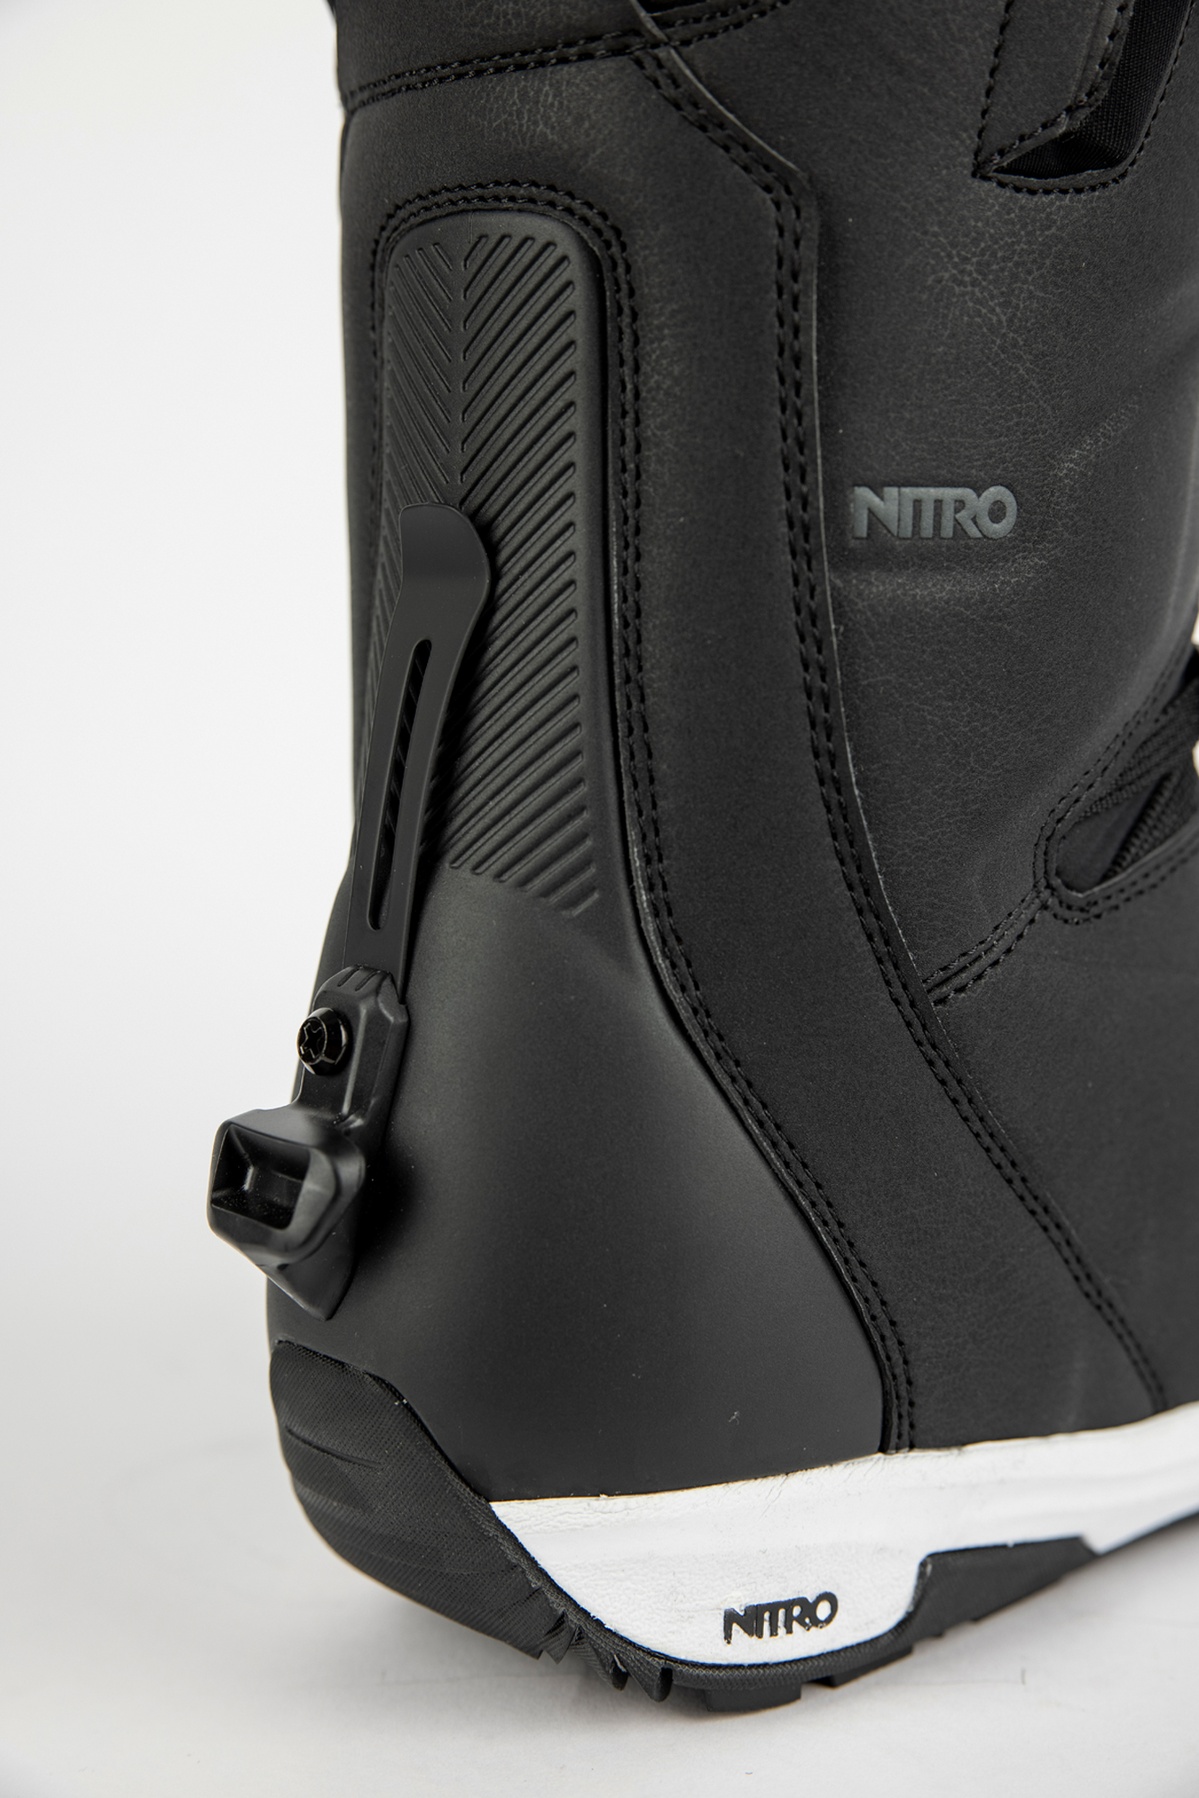 Profile TLS Step On | Nitro Snowboards